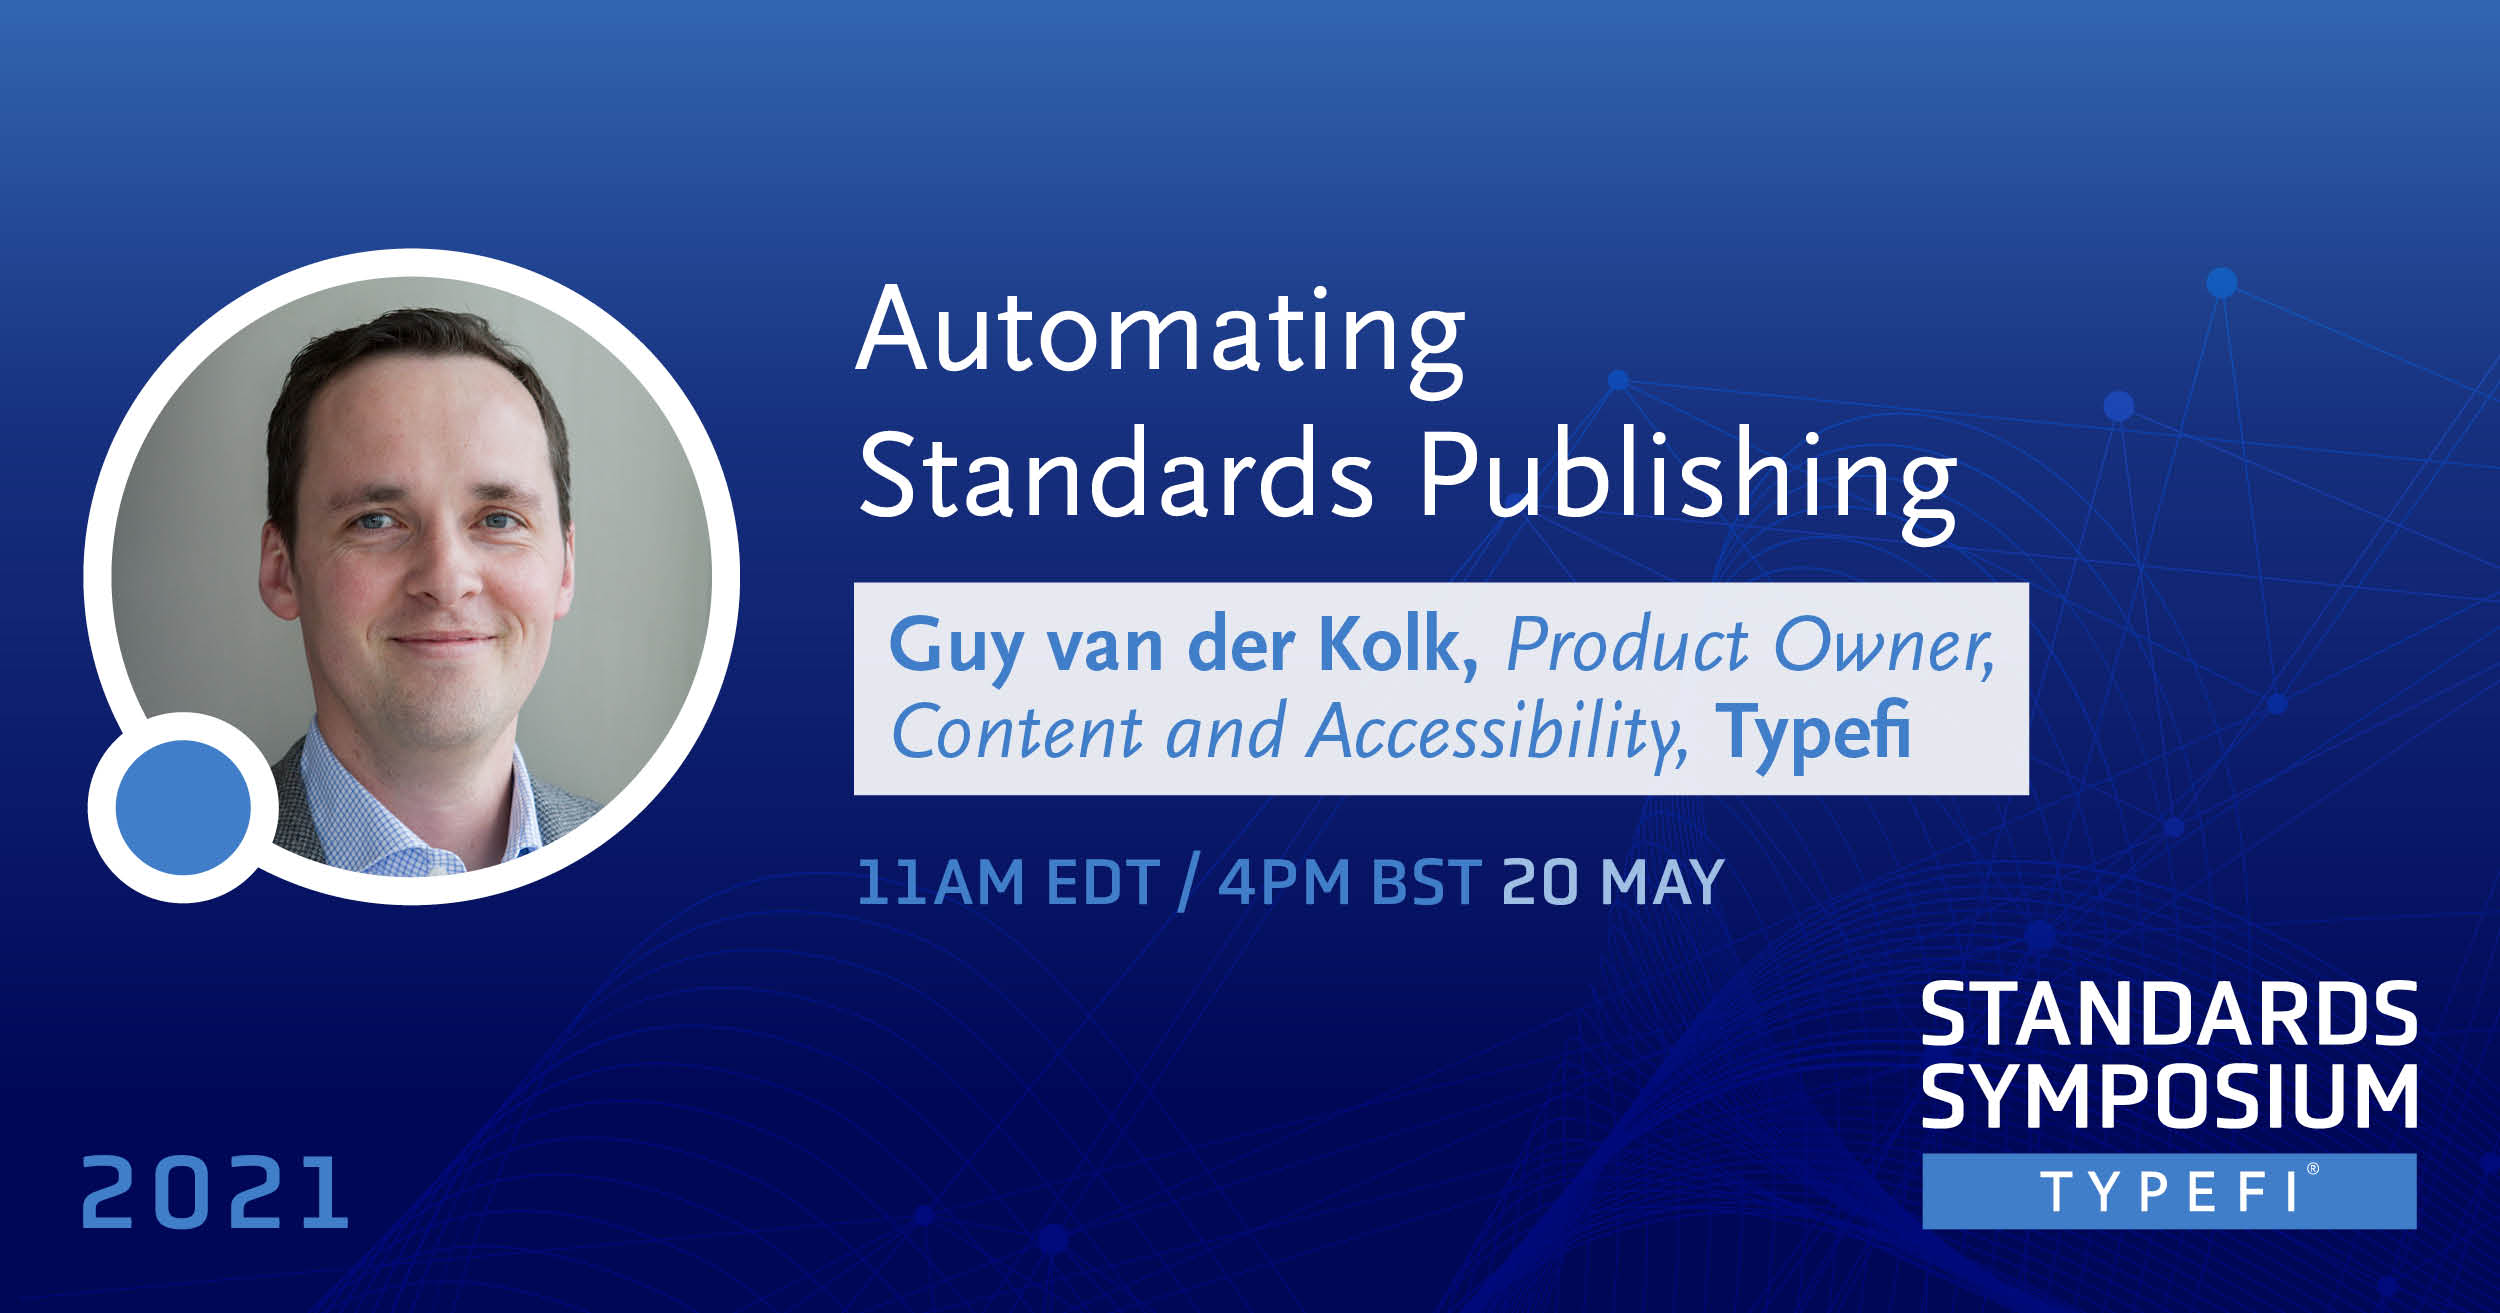 Promotional image for Guy van der Kolk's Typefi Demo - Automating Standards Publishing for the Typefi Standards Symposium 2021